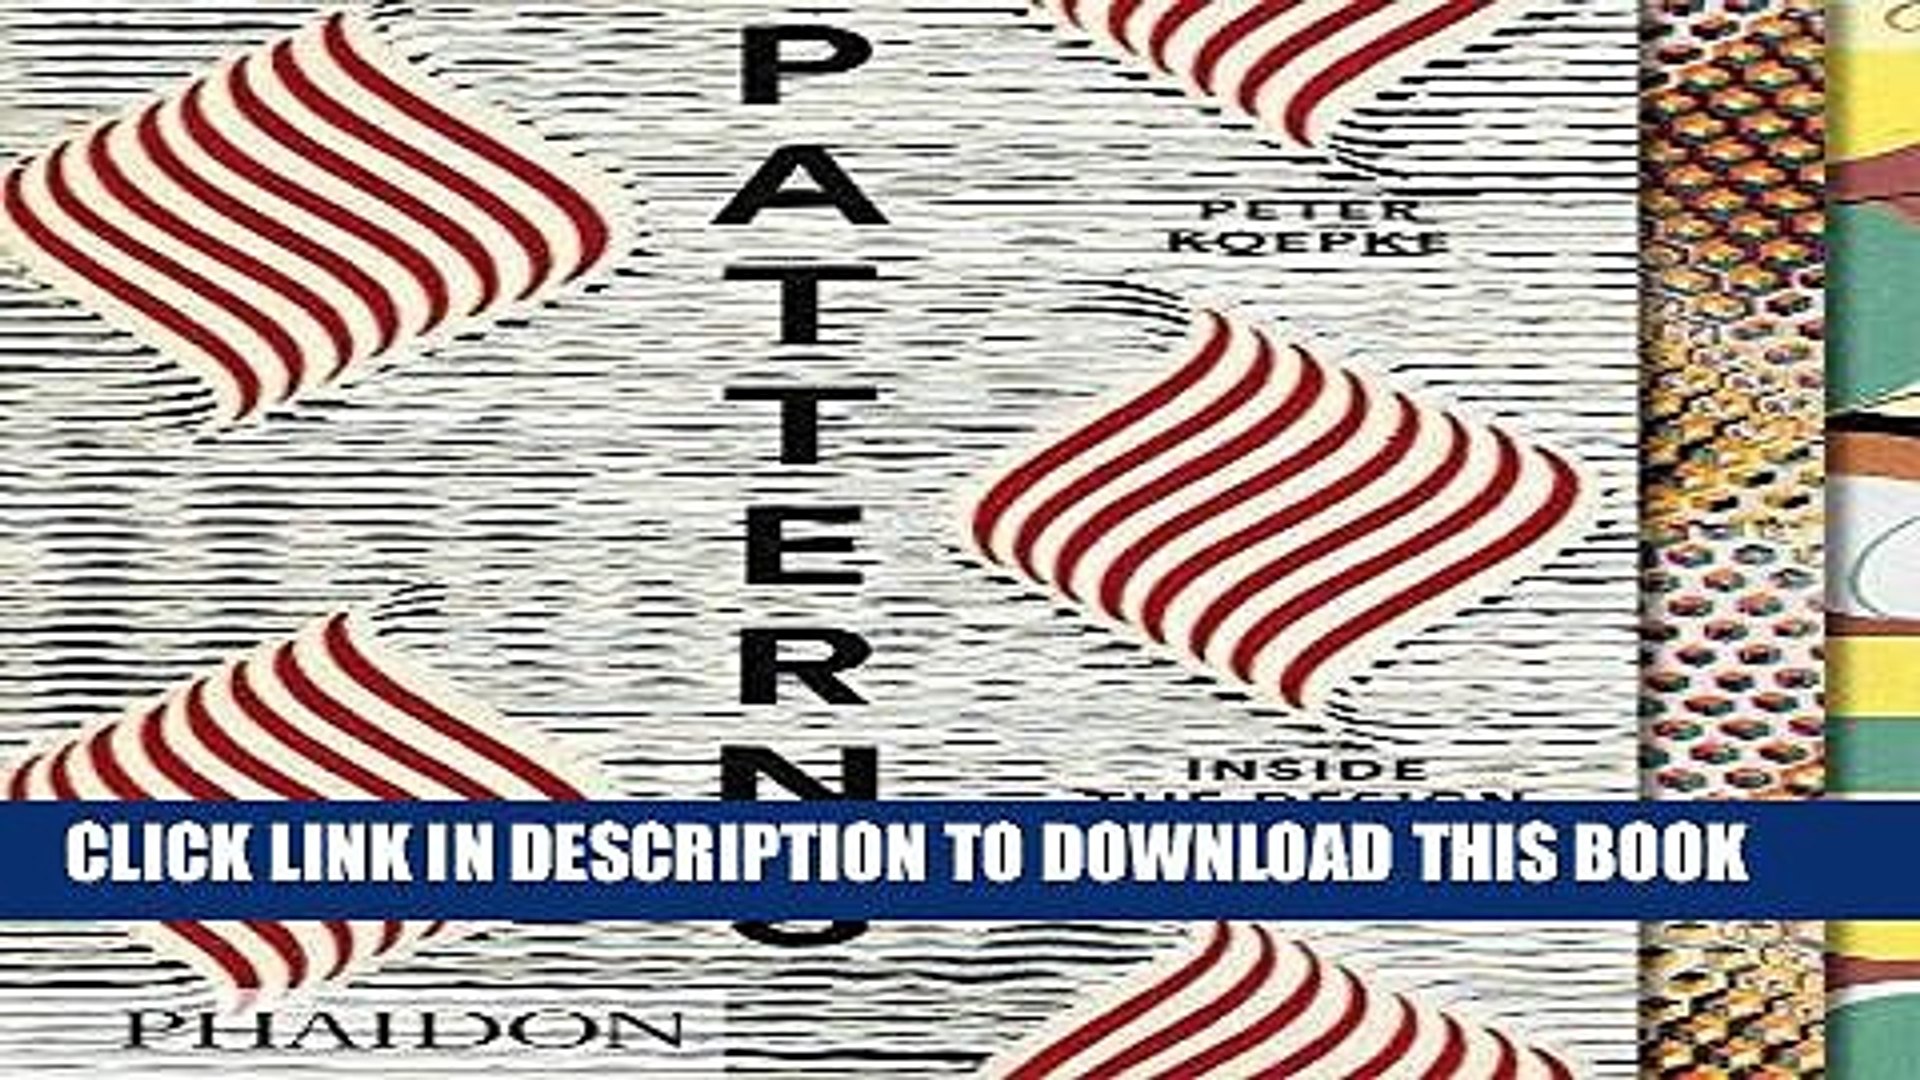 Best Seller Patterns: Inside the Design Library Free Download